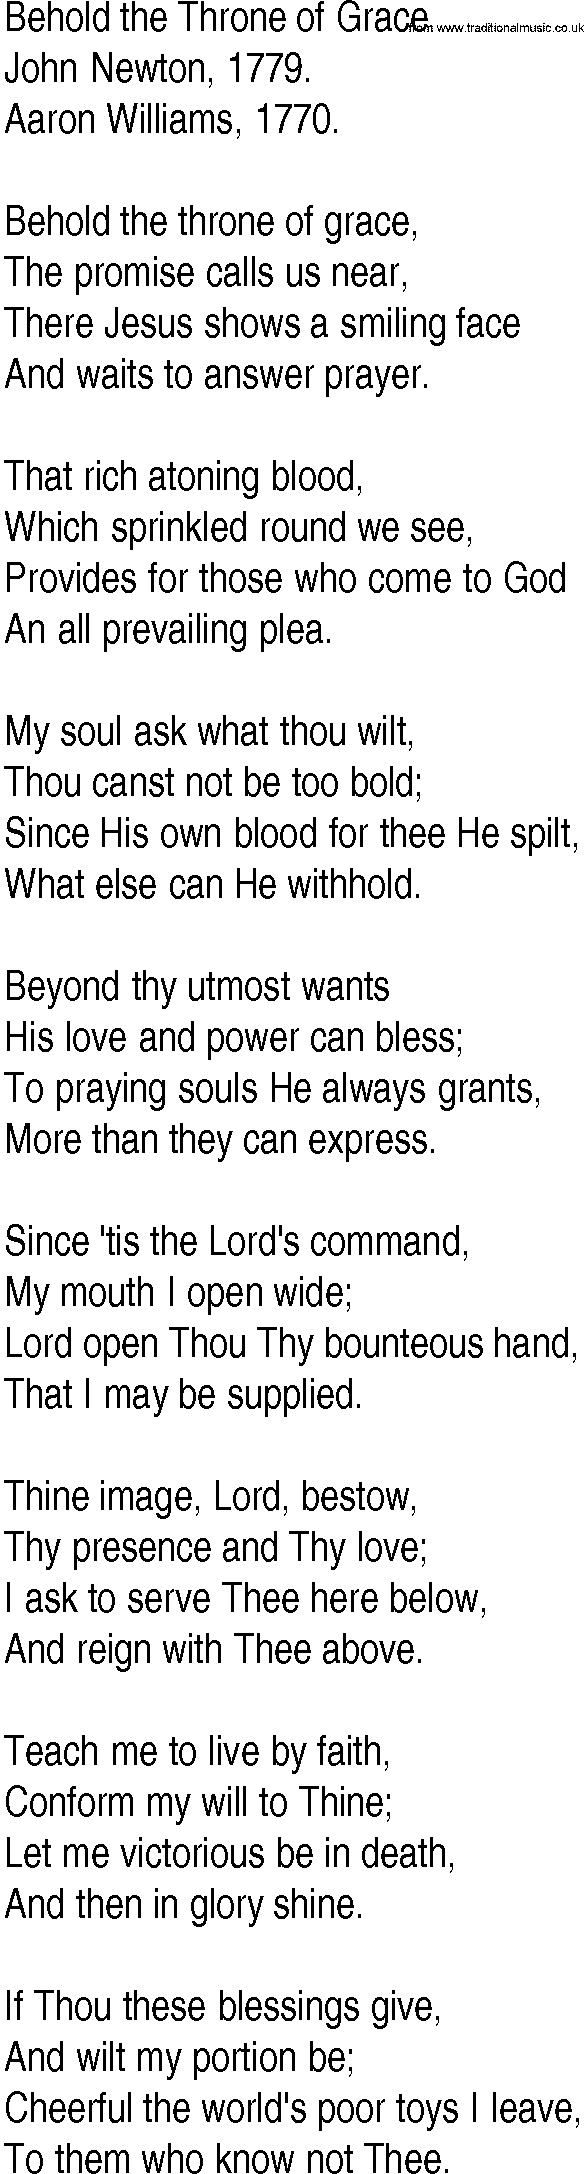 Hymn and Gospel Song: Behold the Throne of Grace by John Newton lyrics